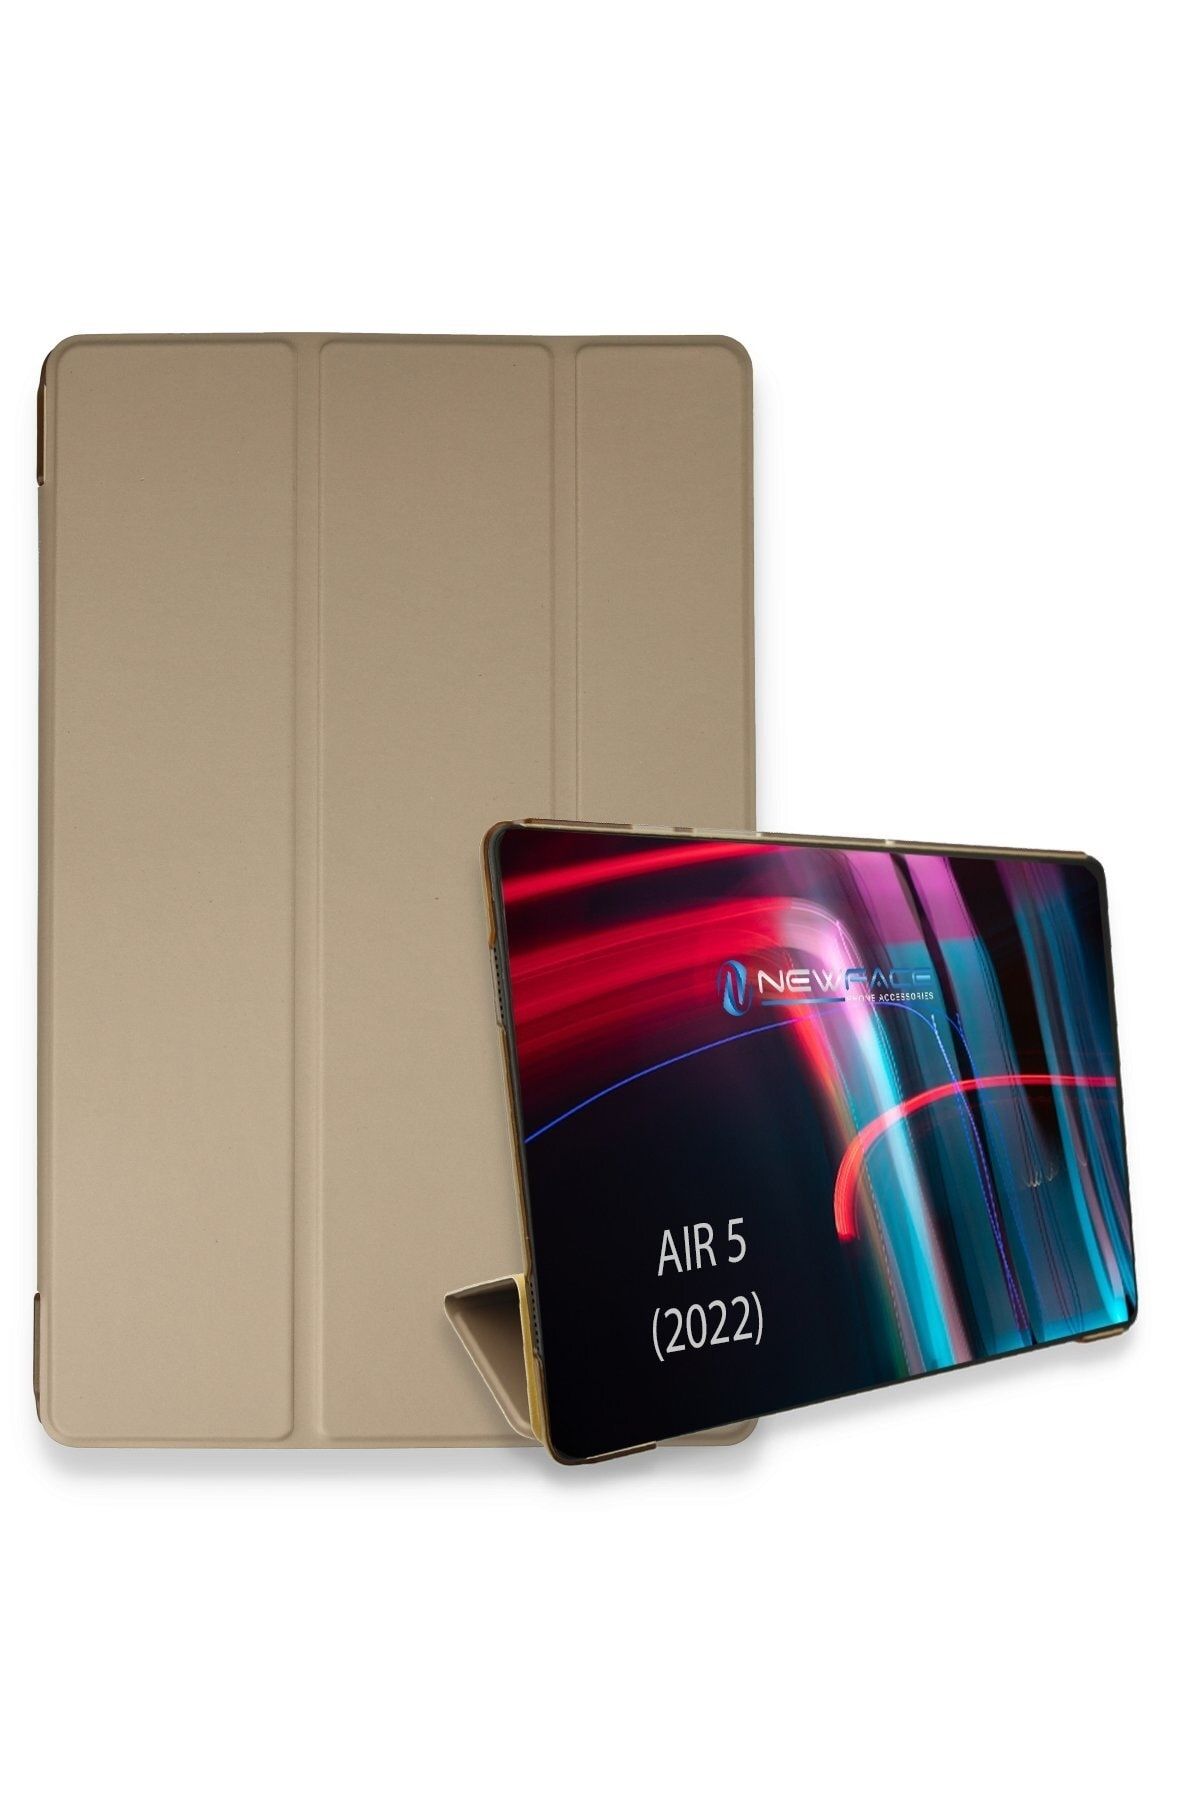 Bilişim Aksesuar Ipad Air 5 (2022) Kılıf Tablet Smart Cover Kılıf - Gold